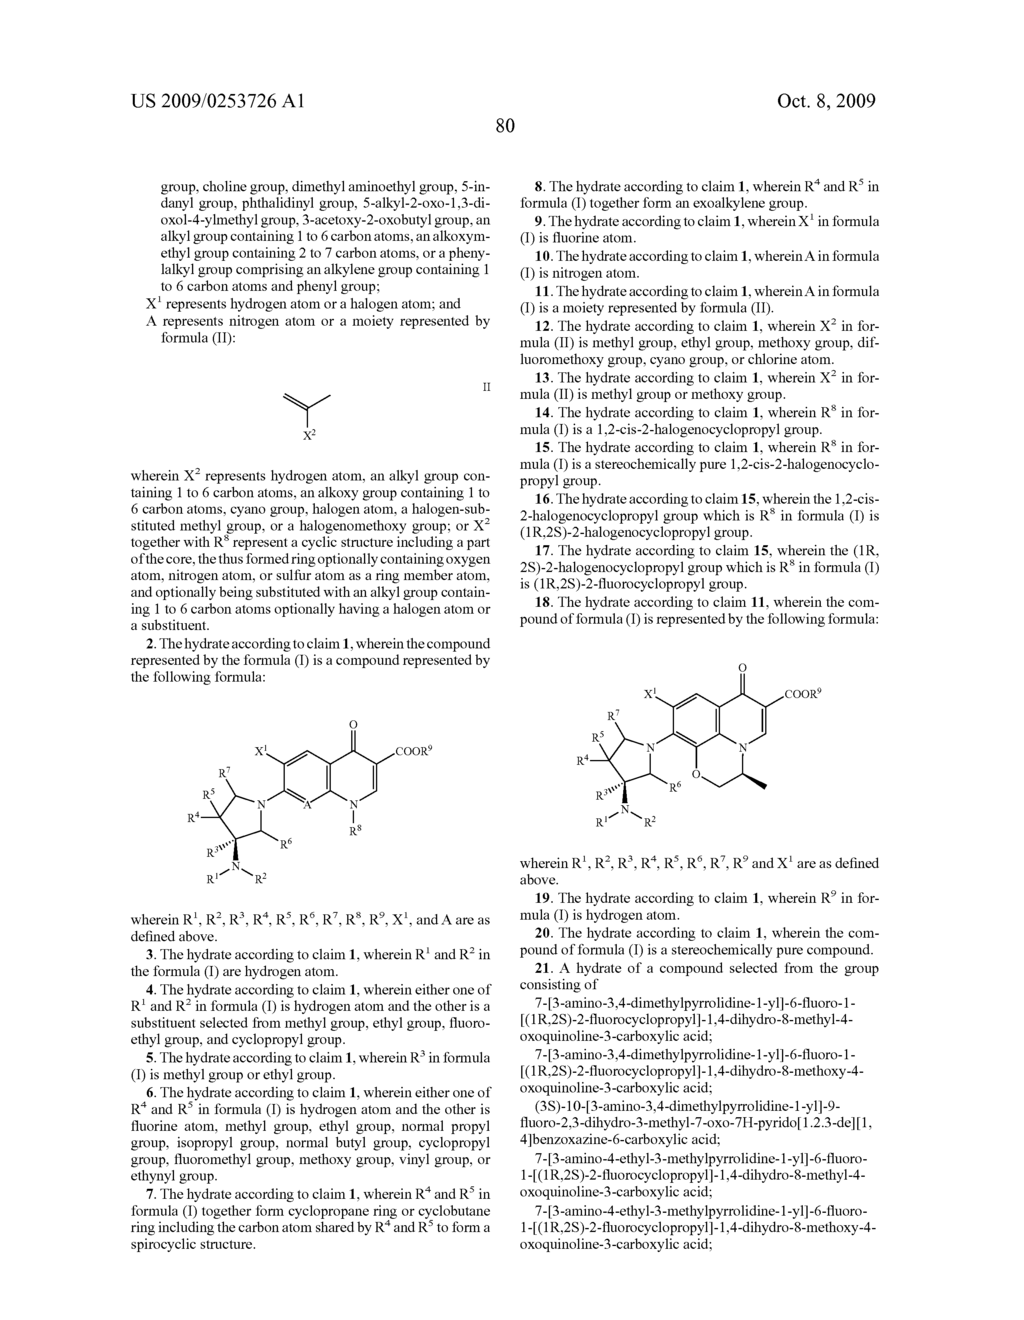 TRI-, TETRA-SUBSTITUTED-3-AMINOPYRROLIDINE DERIVATIVE - diagram, schematic, and image 85